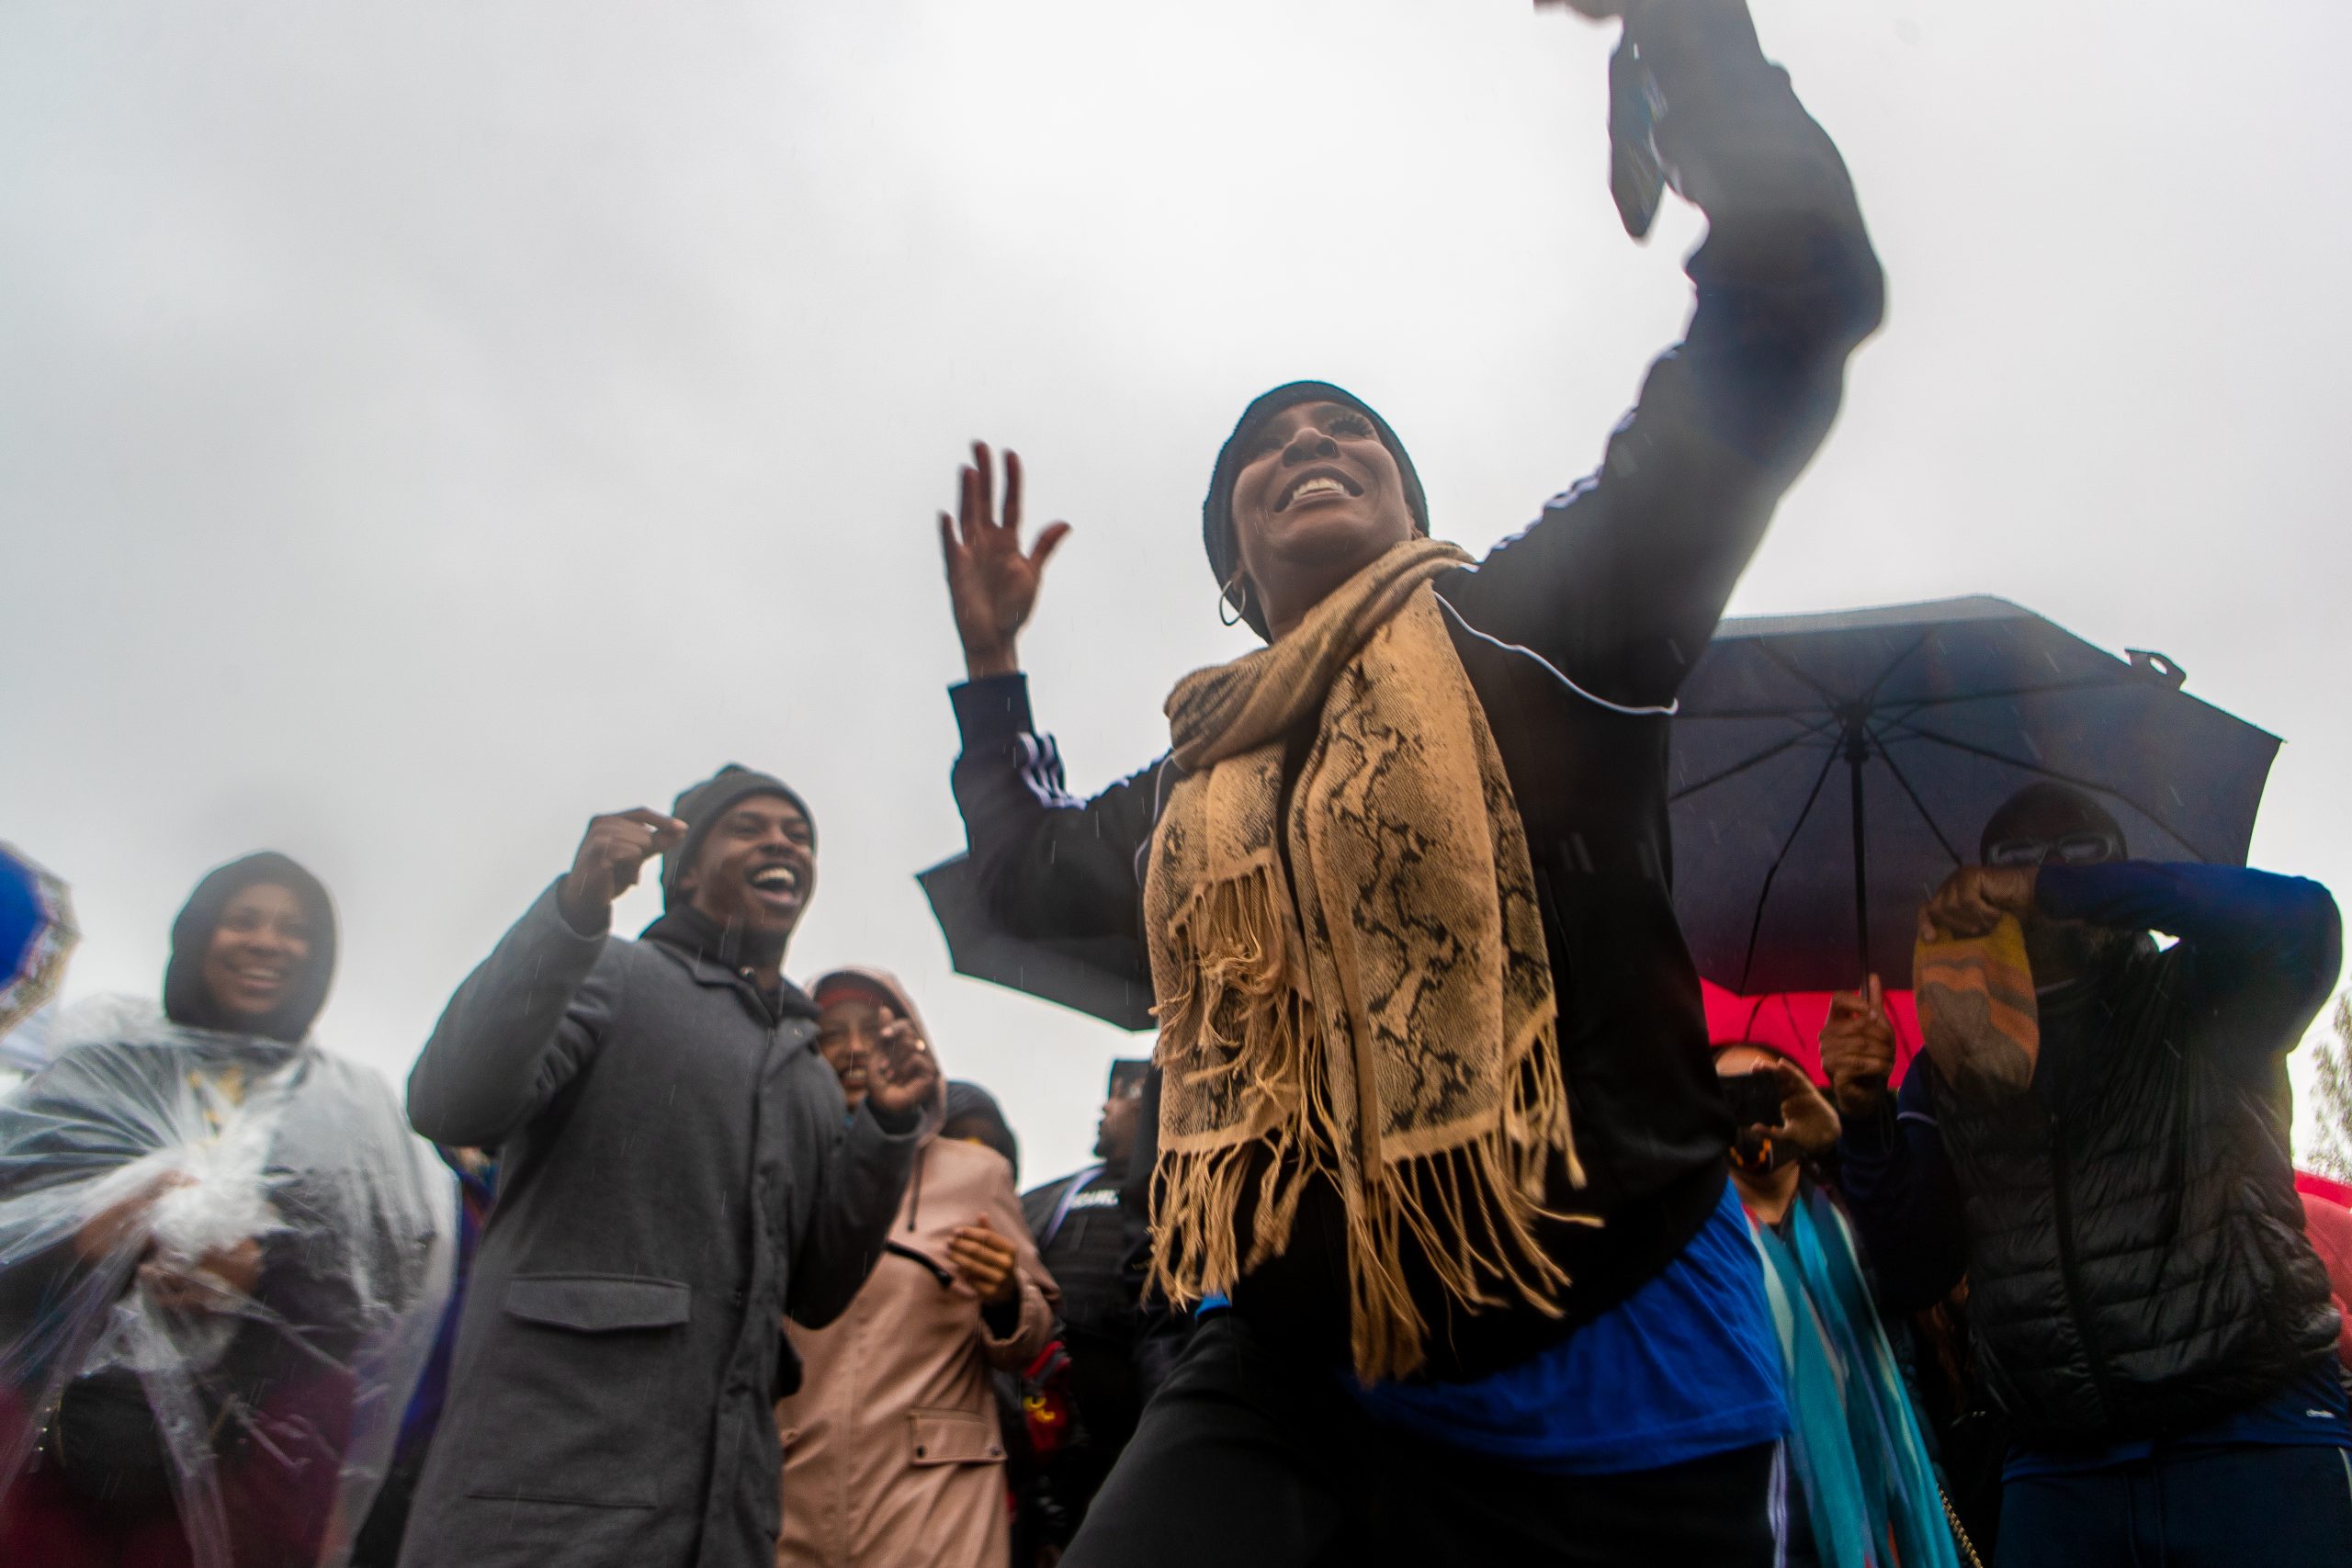 An African American woman dances joyfully against an overcast backdrop and in the rain